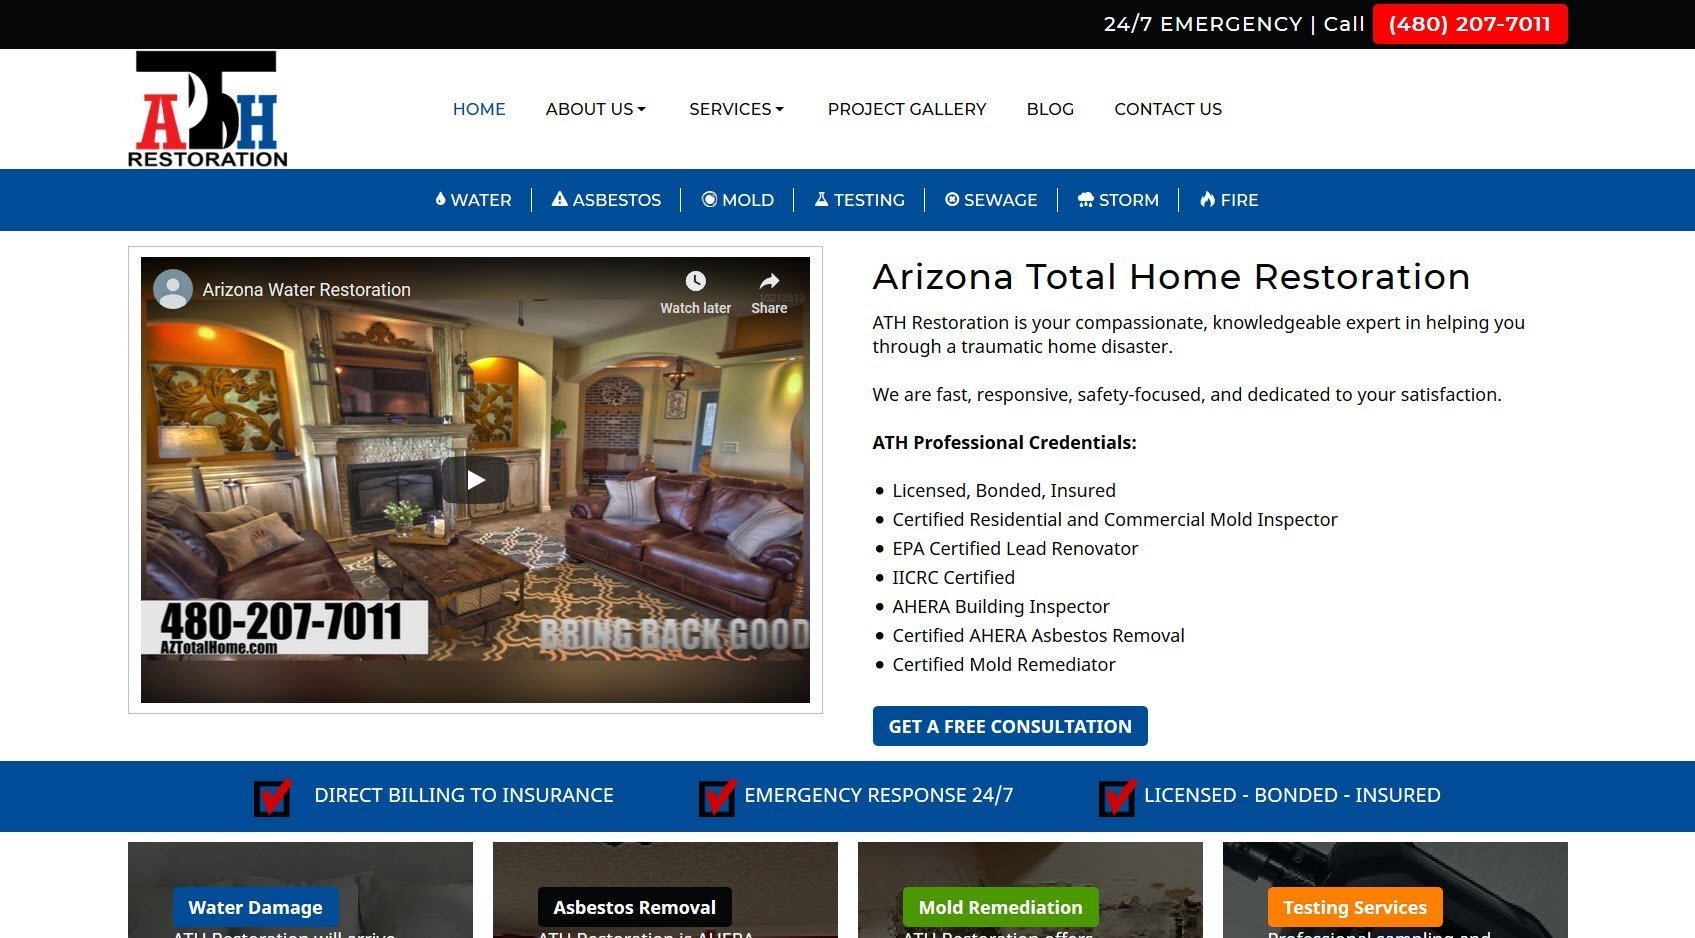 Home Restoration Web Design Screenshot - Arizona Total Home Restoration - Mesa, AZ - Created by Web Designs Your Way